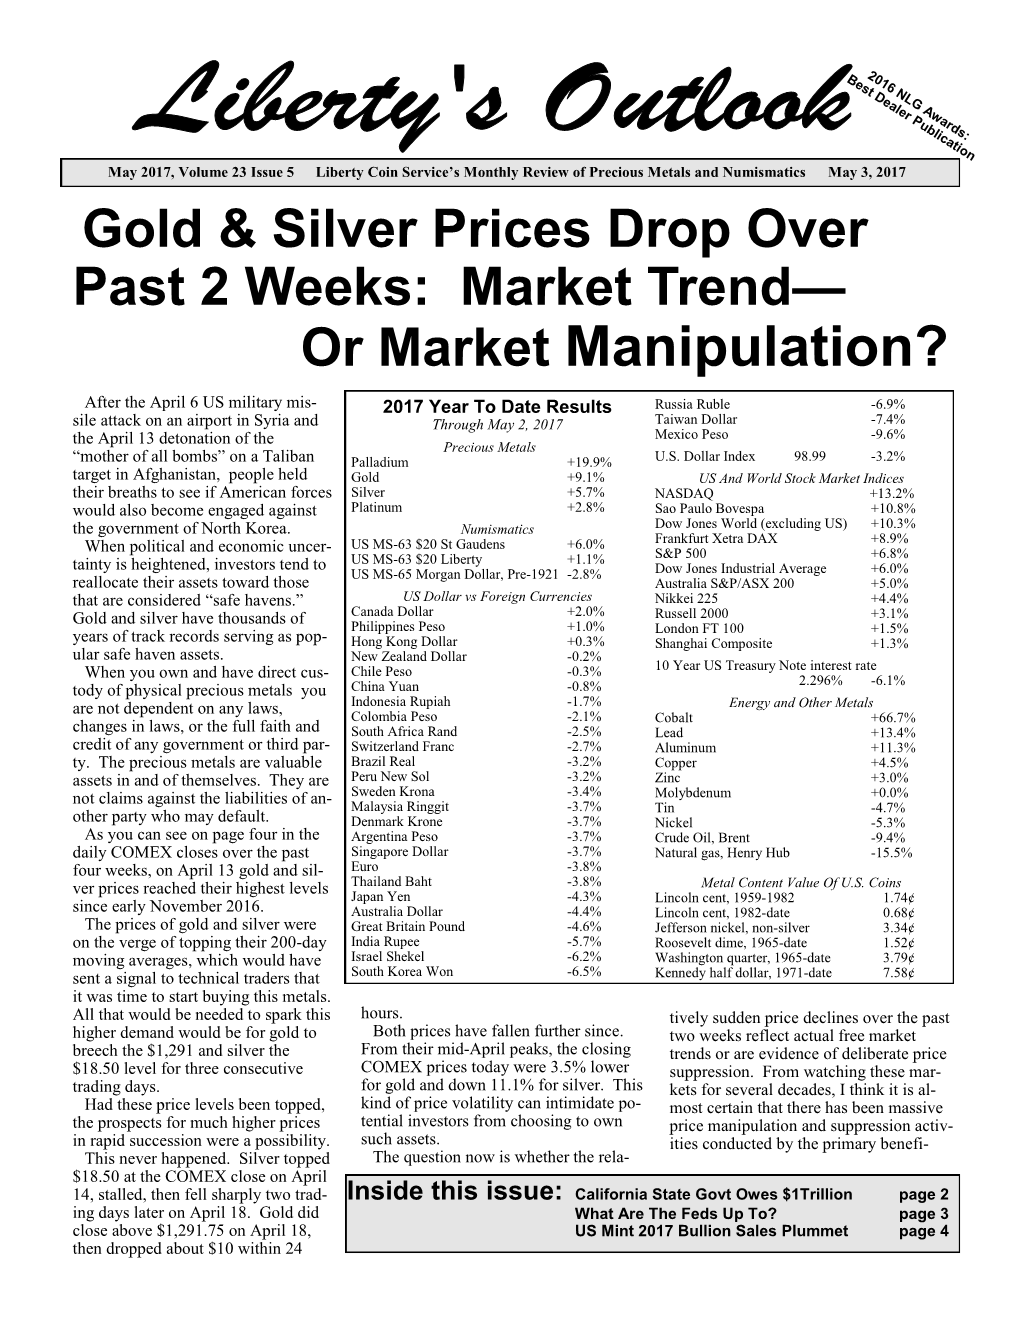 Or Market Manipulation?